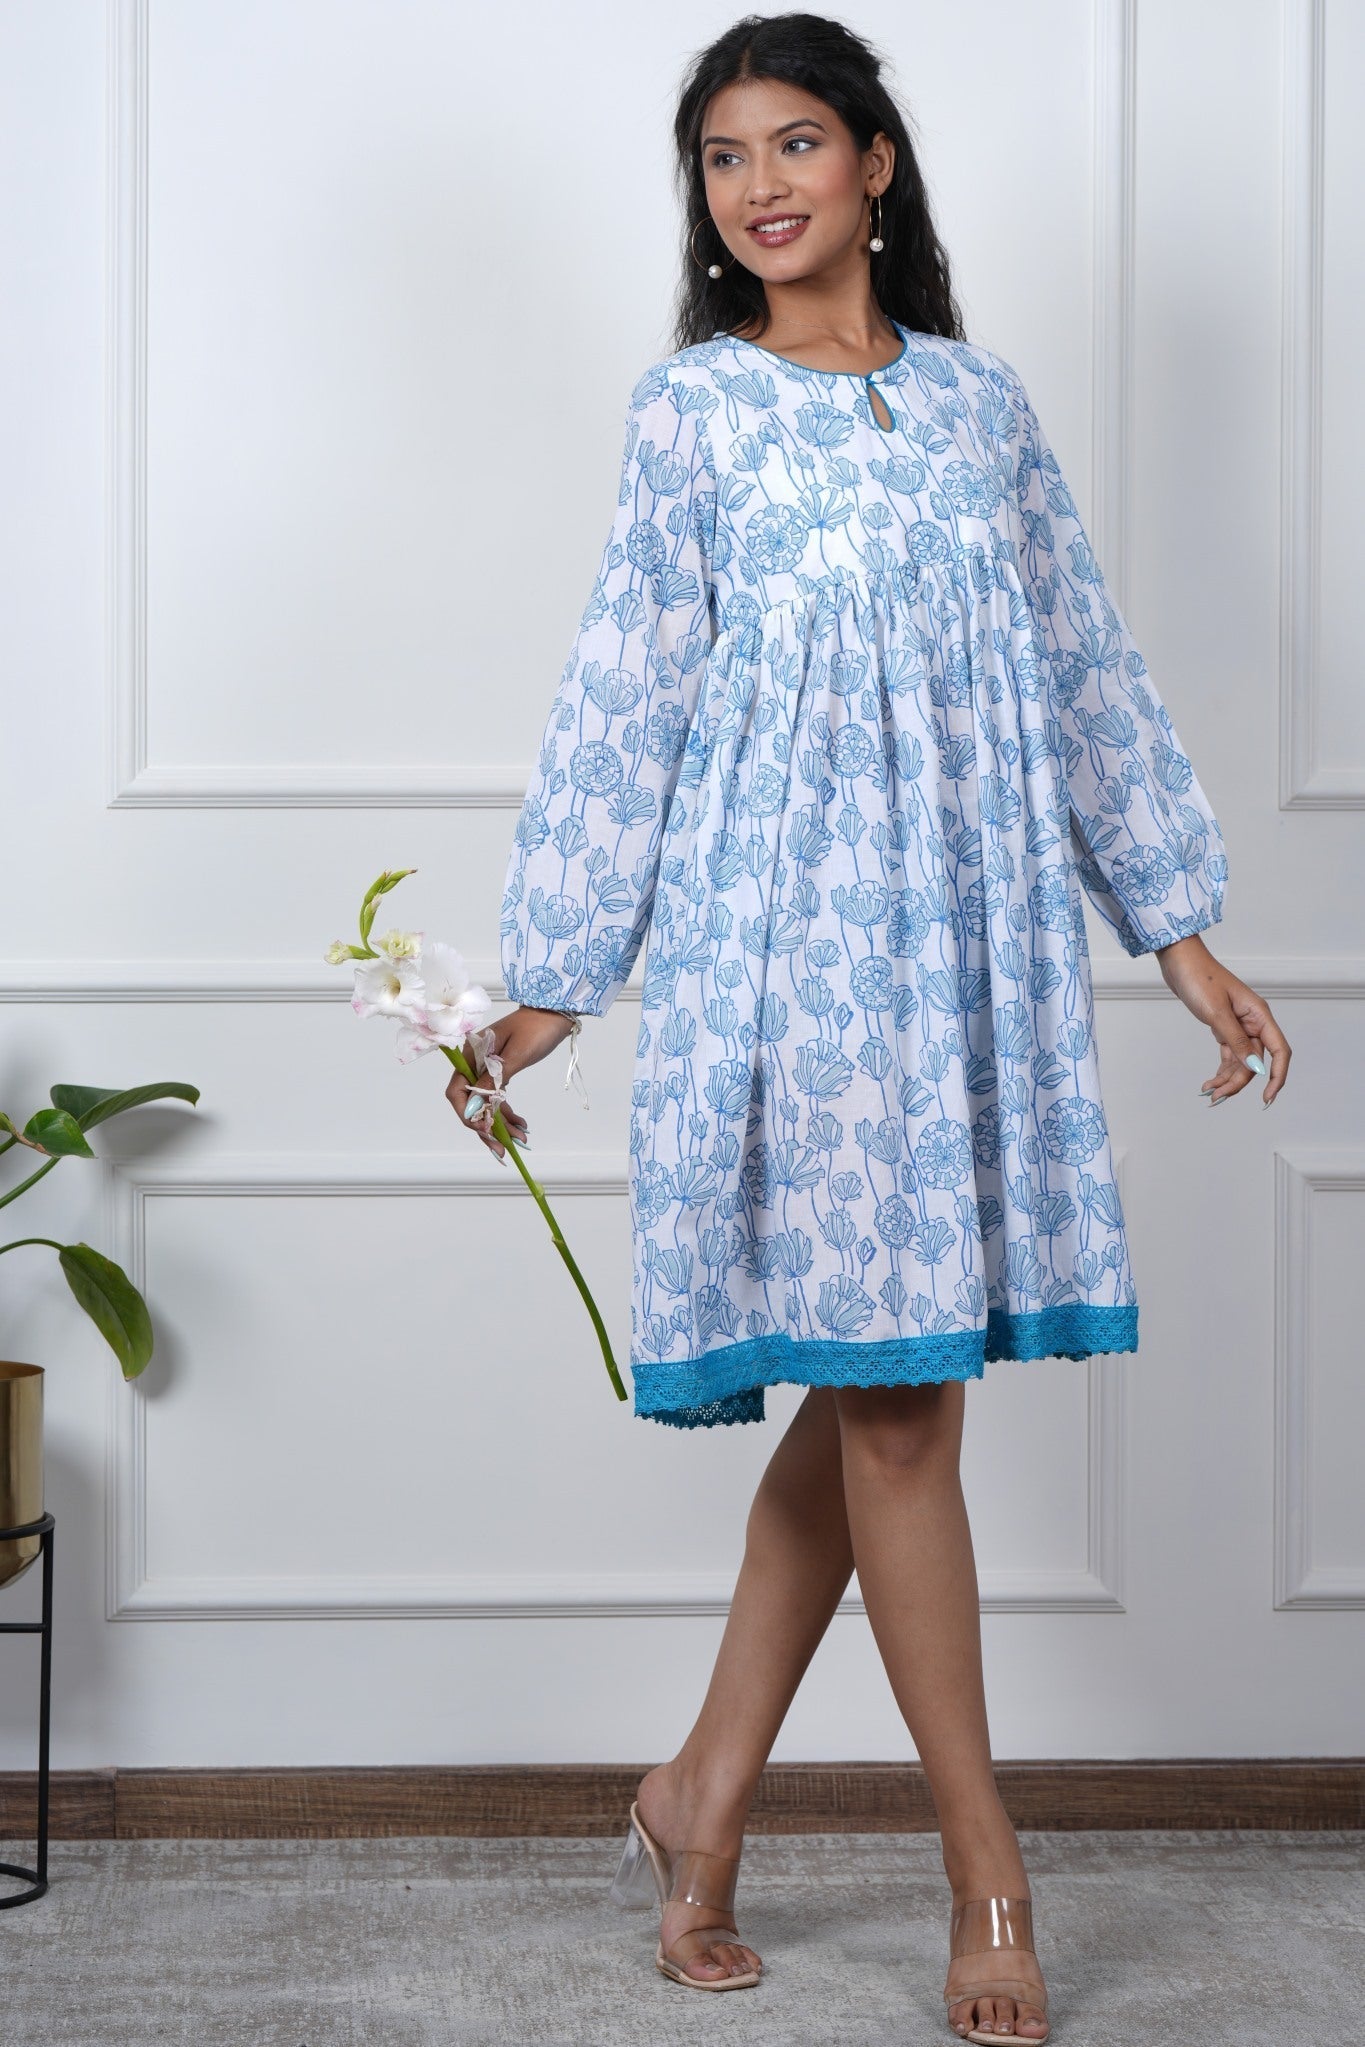 Lily Love Hand Block Printed Dress - SootiSyahi